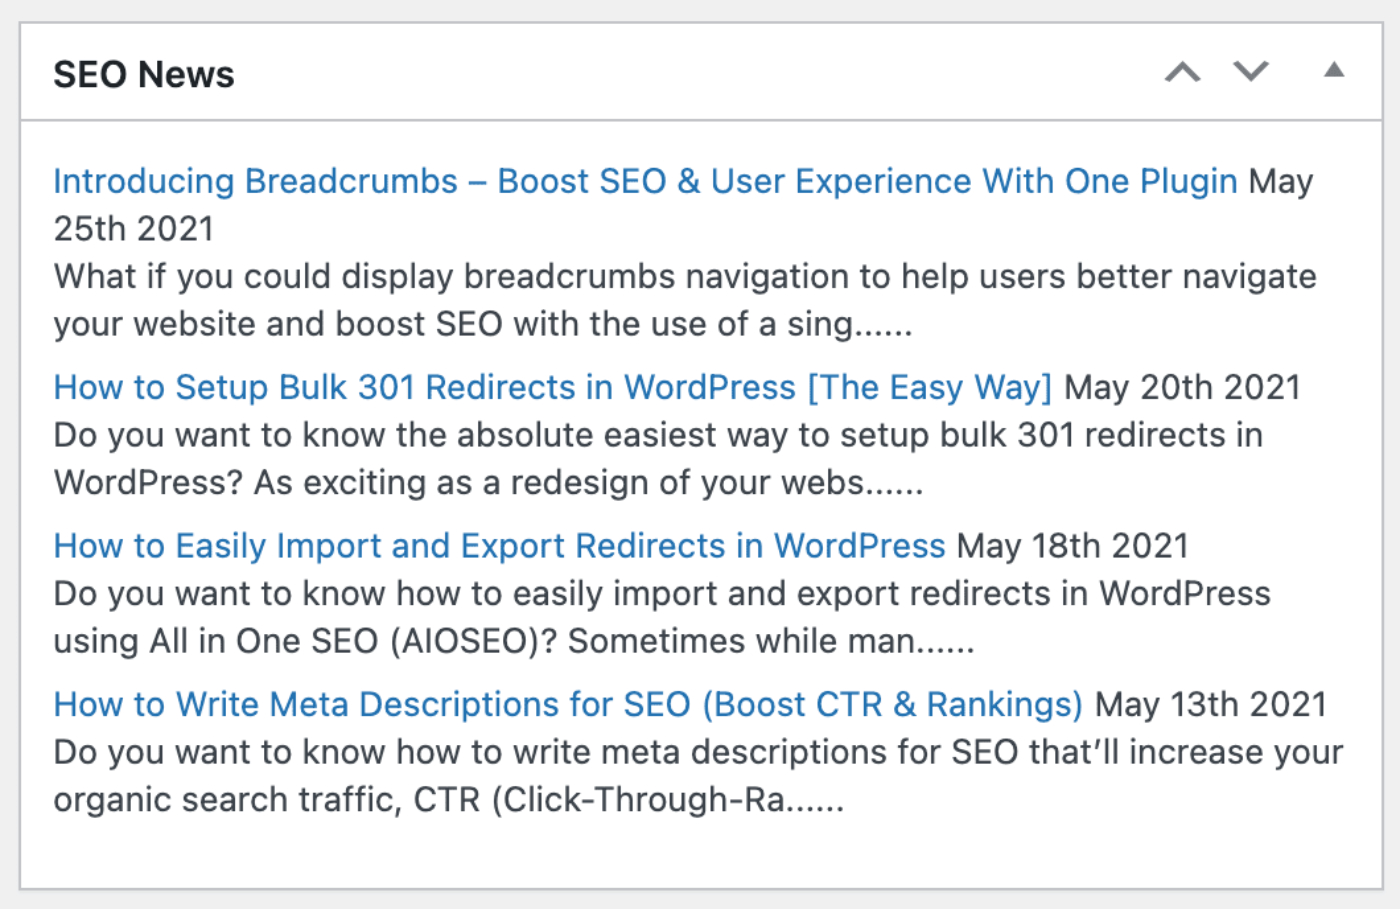 SEO News widget shown on the WordPress Dashboard